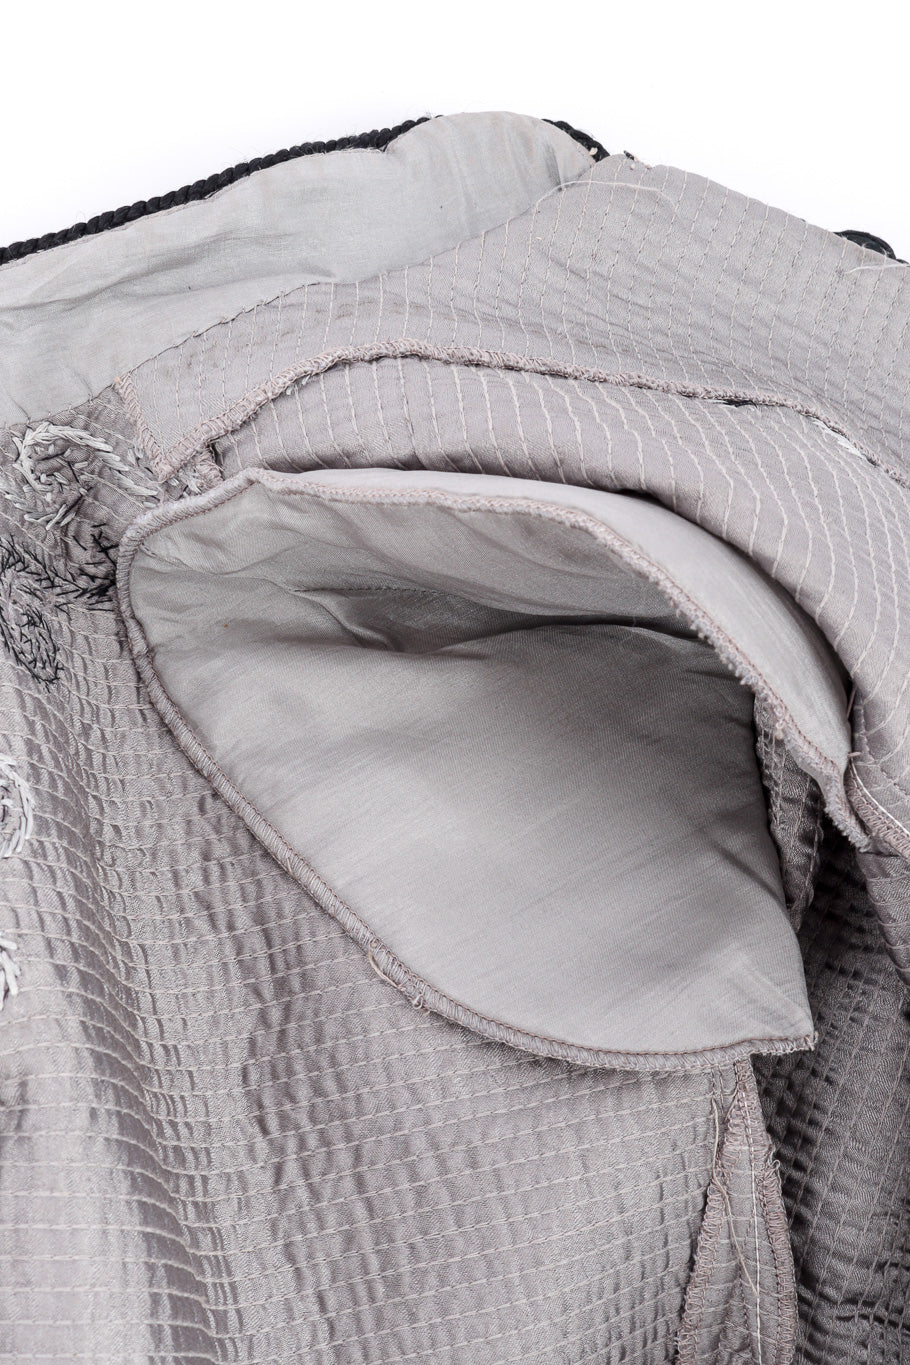 Vintage Mary McFadden Embroidered Quilt Duster shoulder pad closeup @recessla